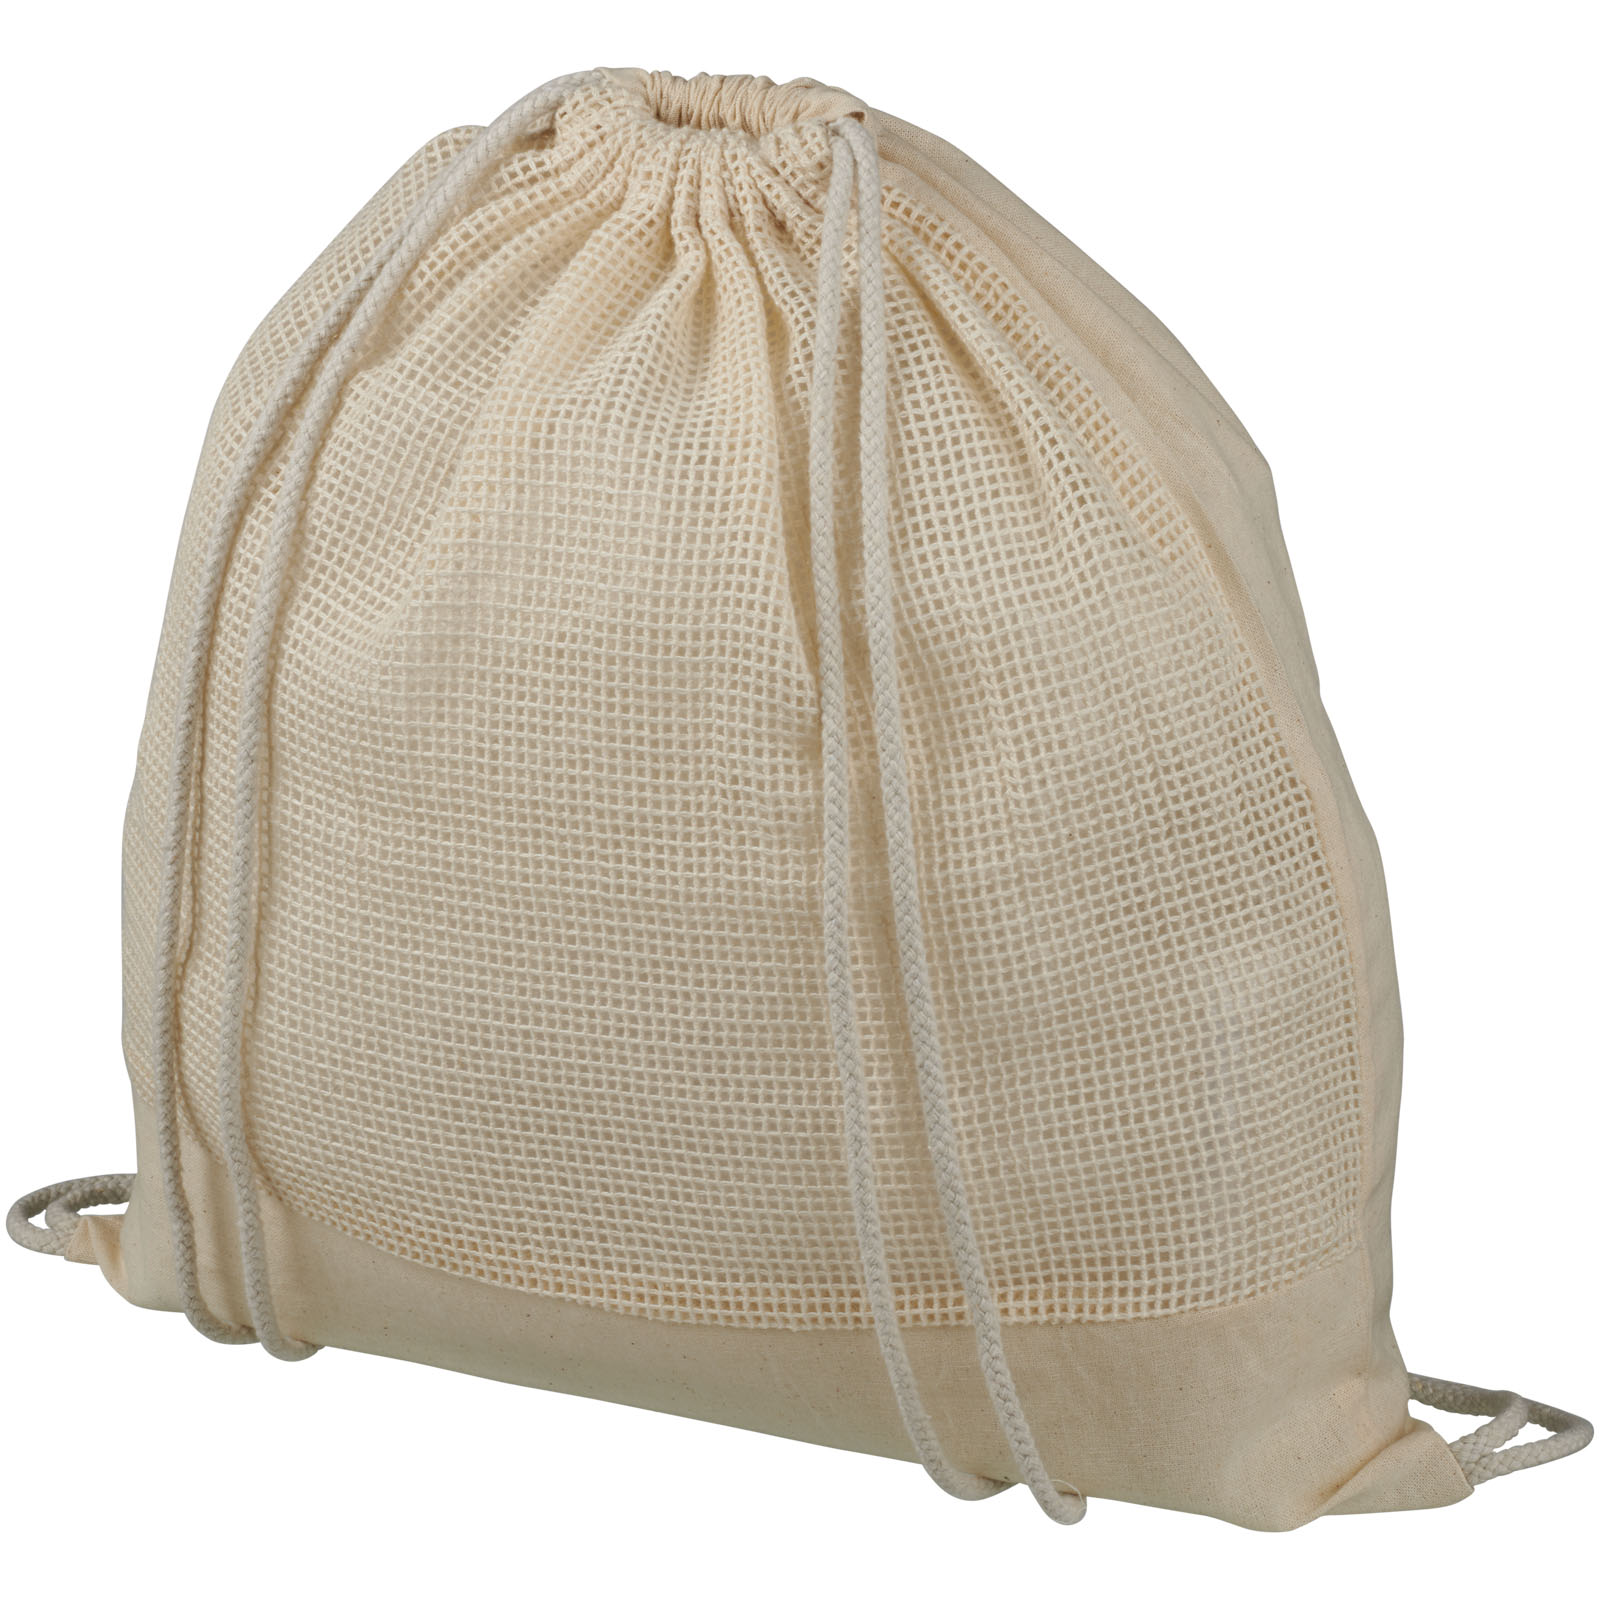 Drawstring Bags - Maine mesh cotton drawstring backpack 5L